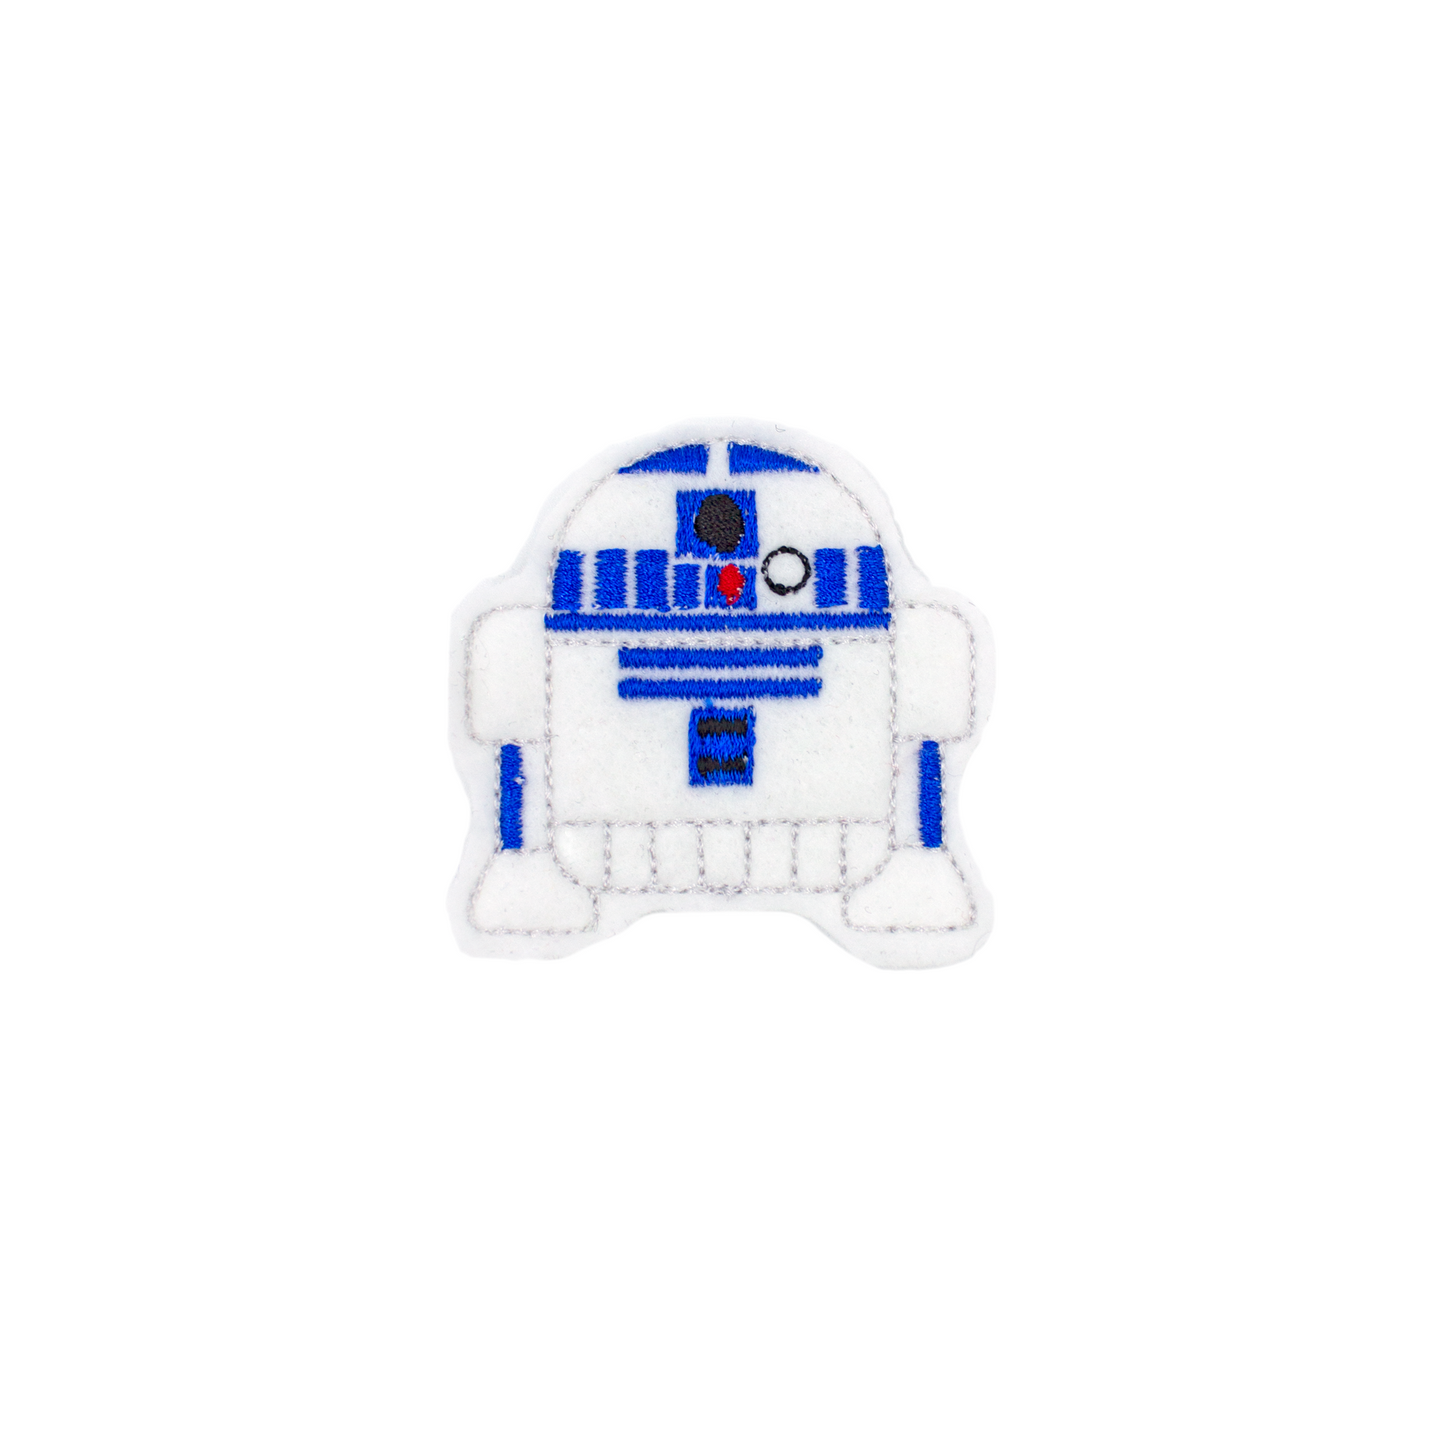 R2-D2 Add-on